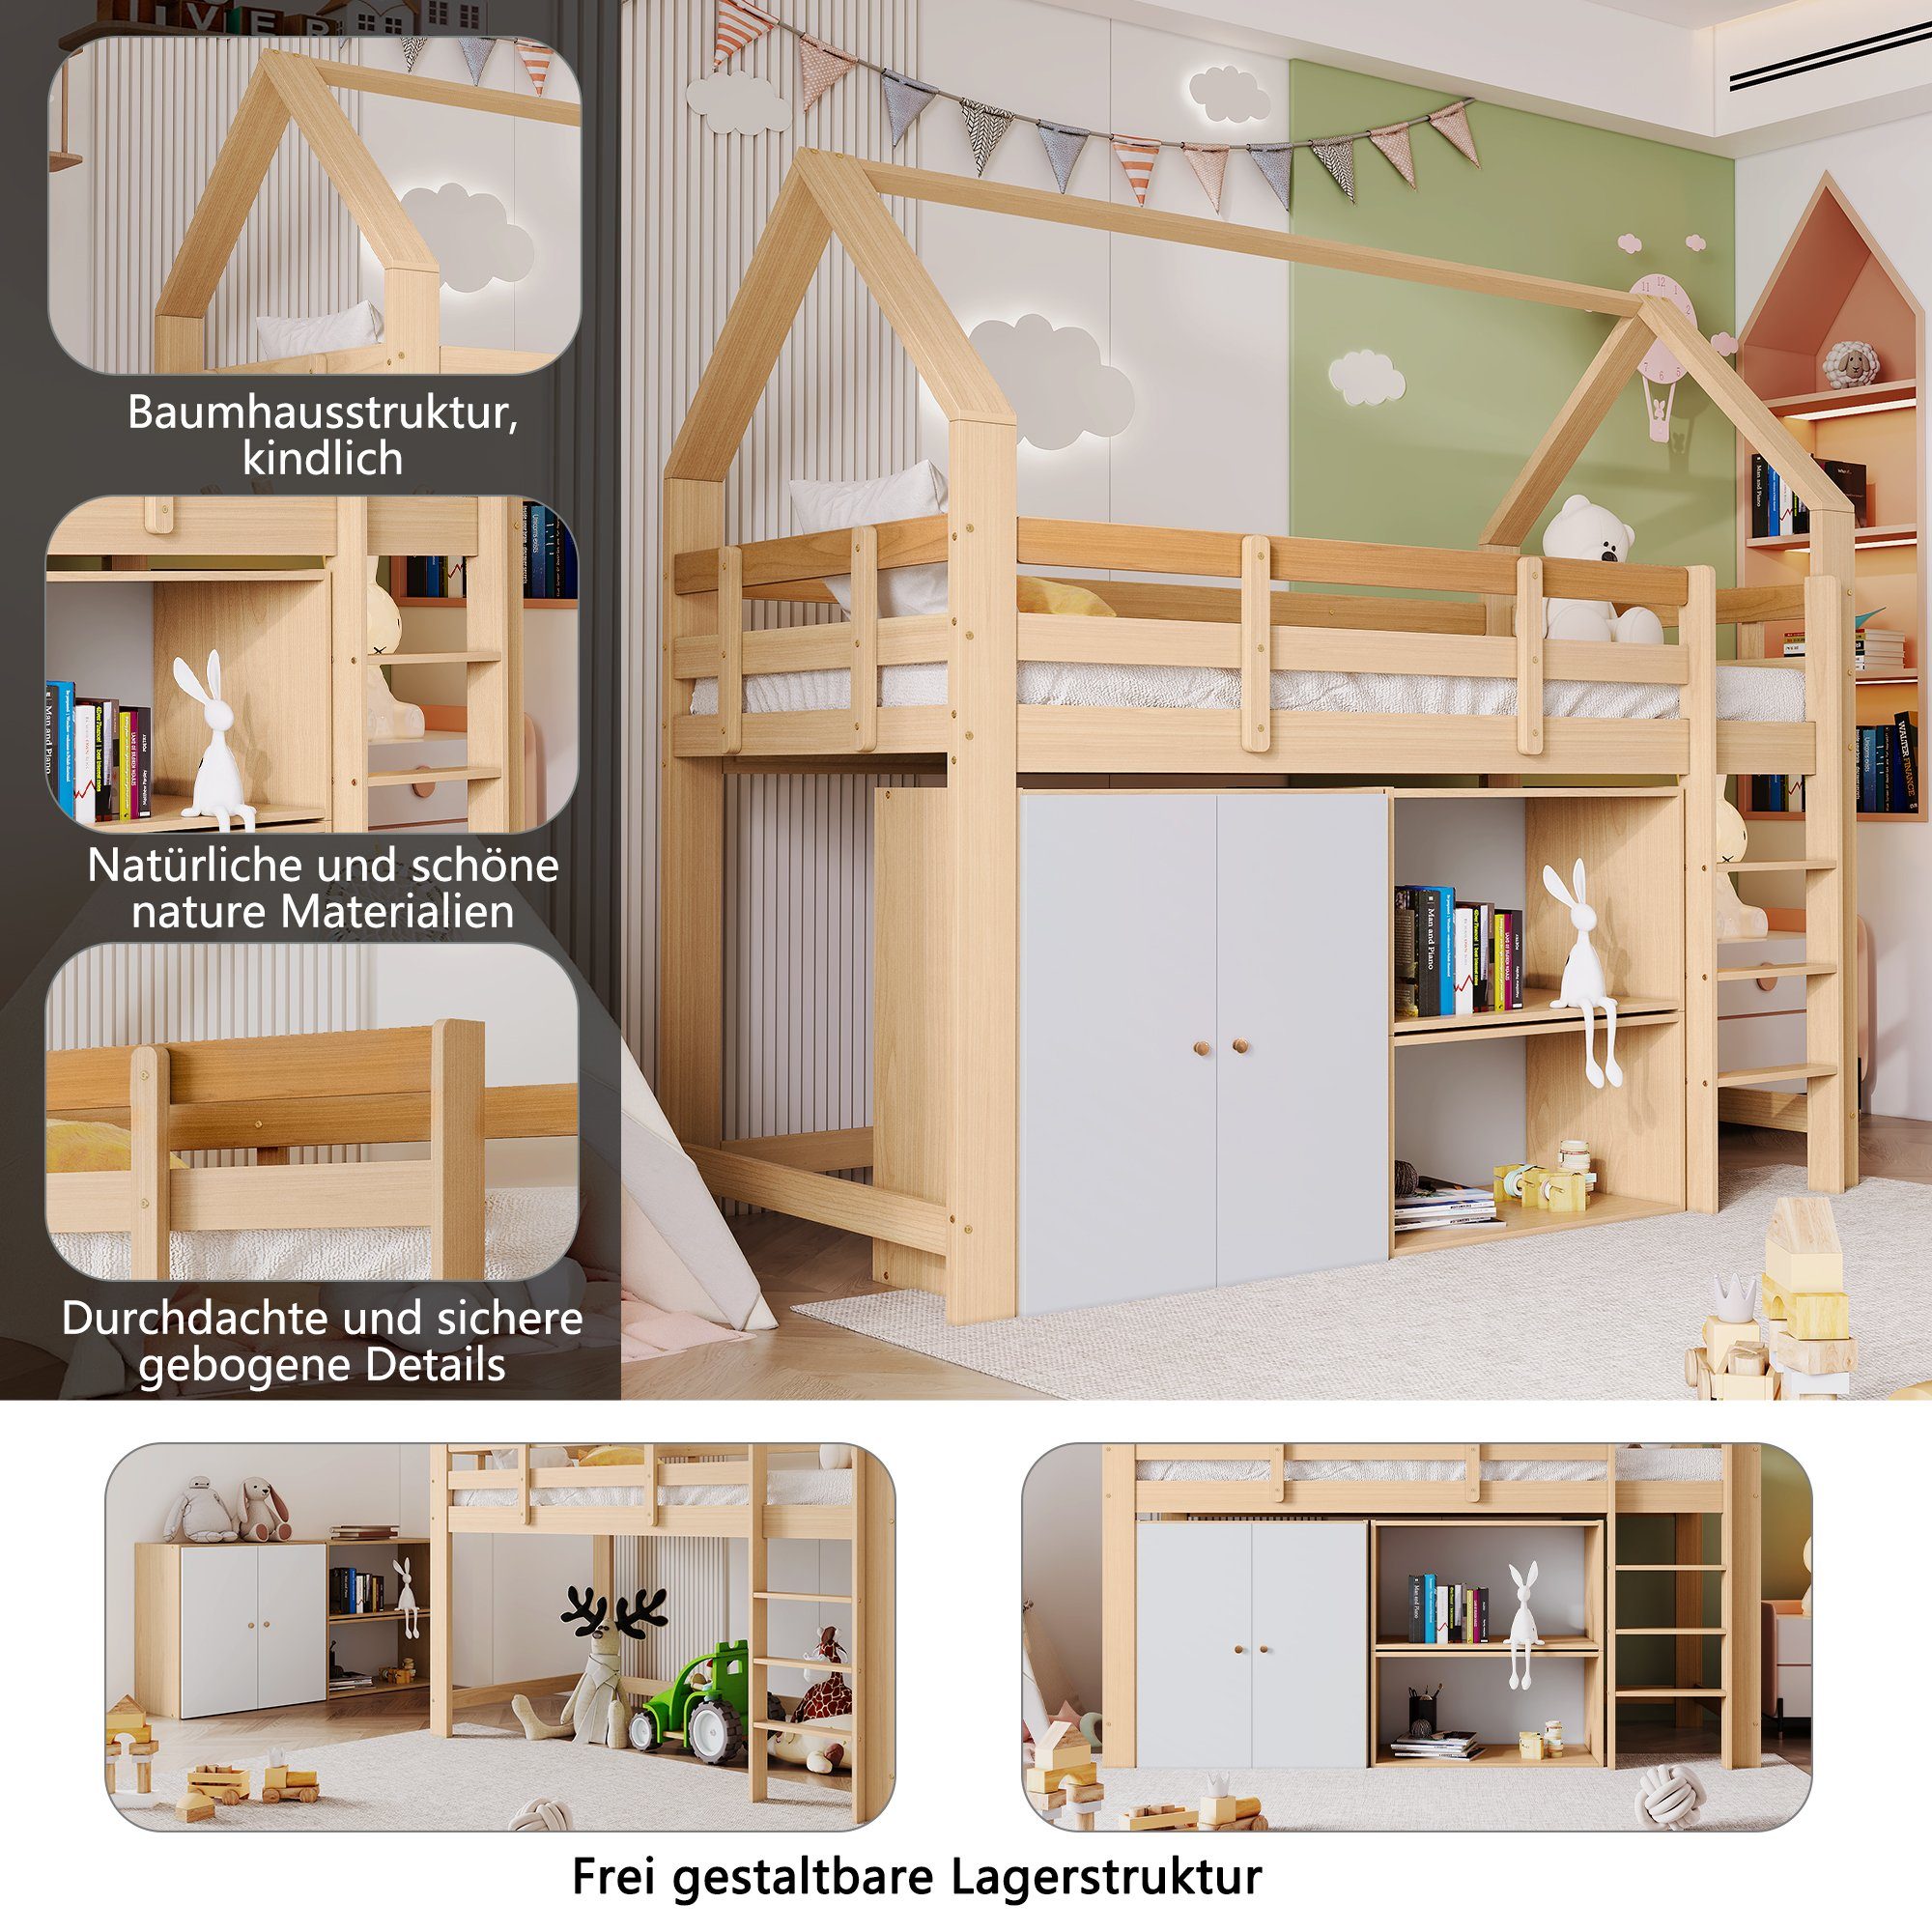 Hausbett SOFTWEARY inkl. Hochbett mit Lattenrost Einzelbett, Kiefer (90x200 cm) Kinderbett Rausfallschutz,